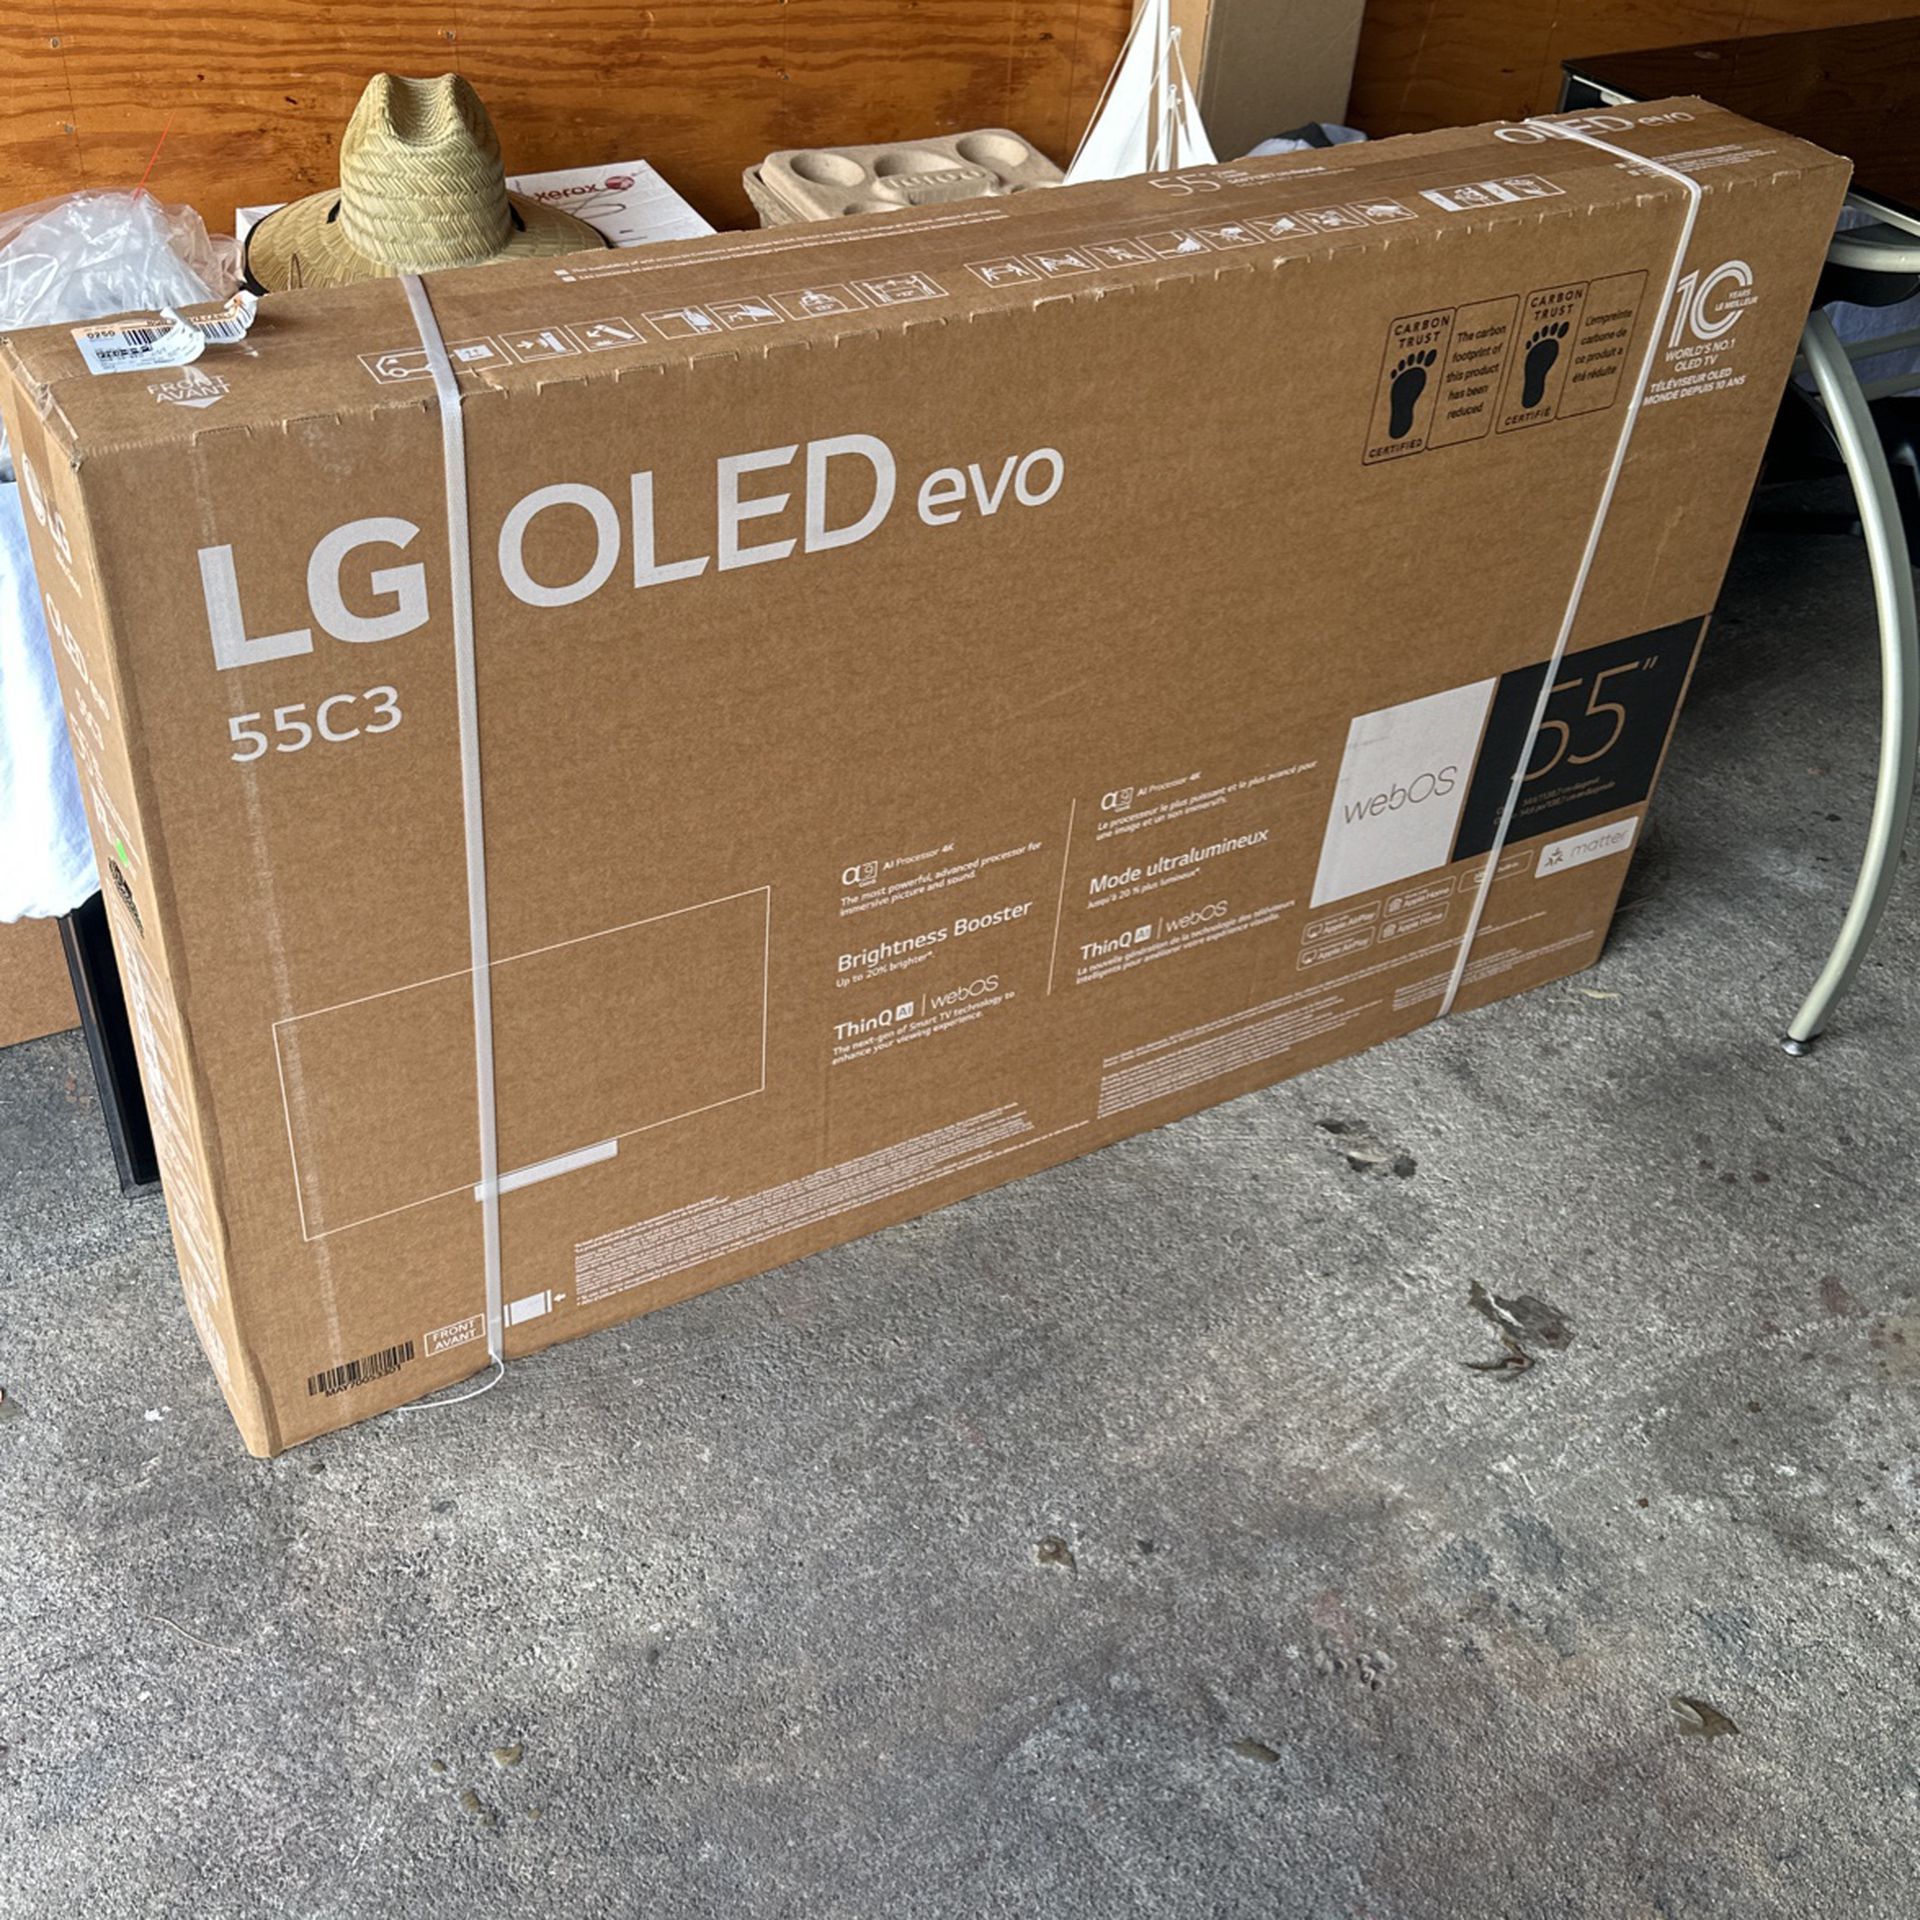 LG 55” C3 Evo OLED - Brand New Still In Box!